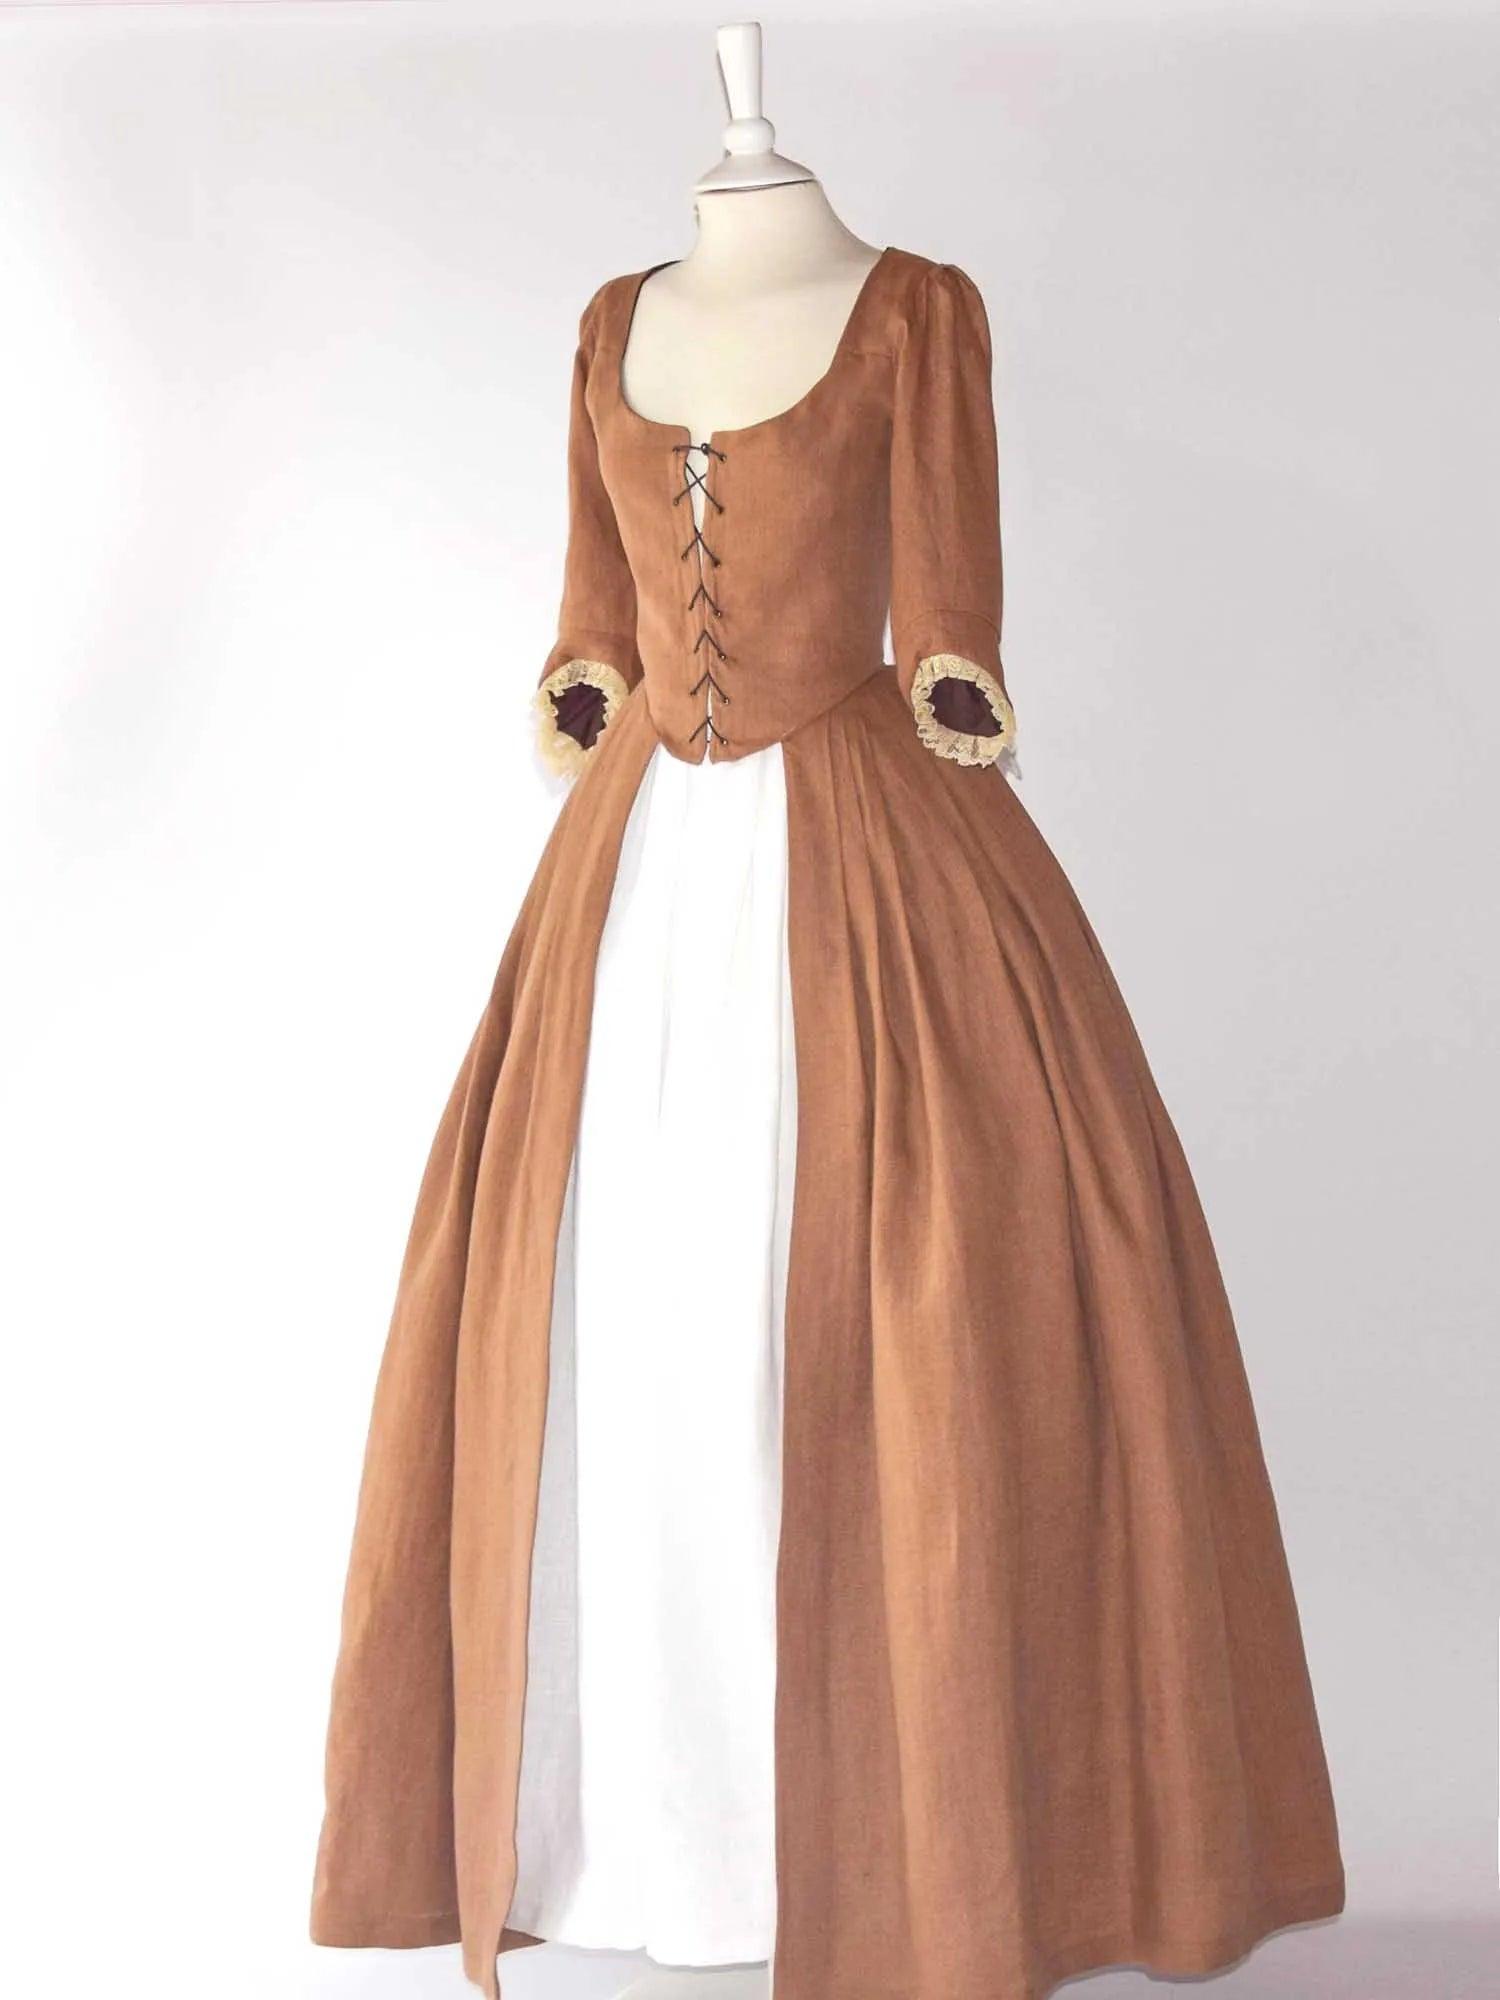 18th Century Overdress in Toffee Linen & Skirt - Atelier Serraspina